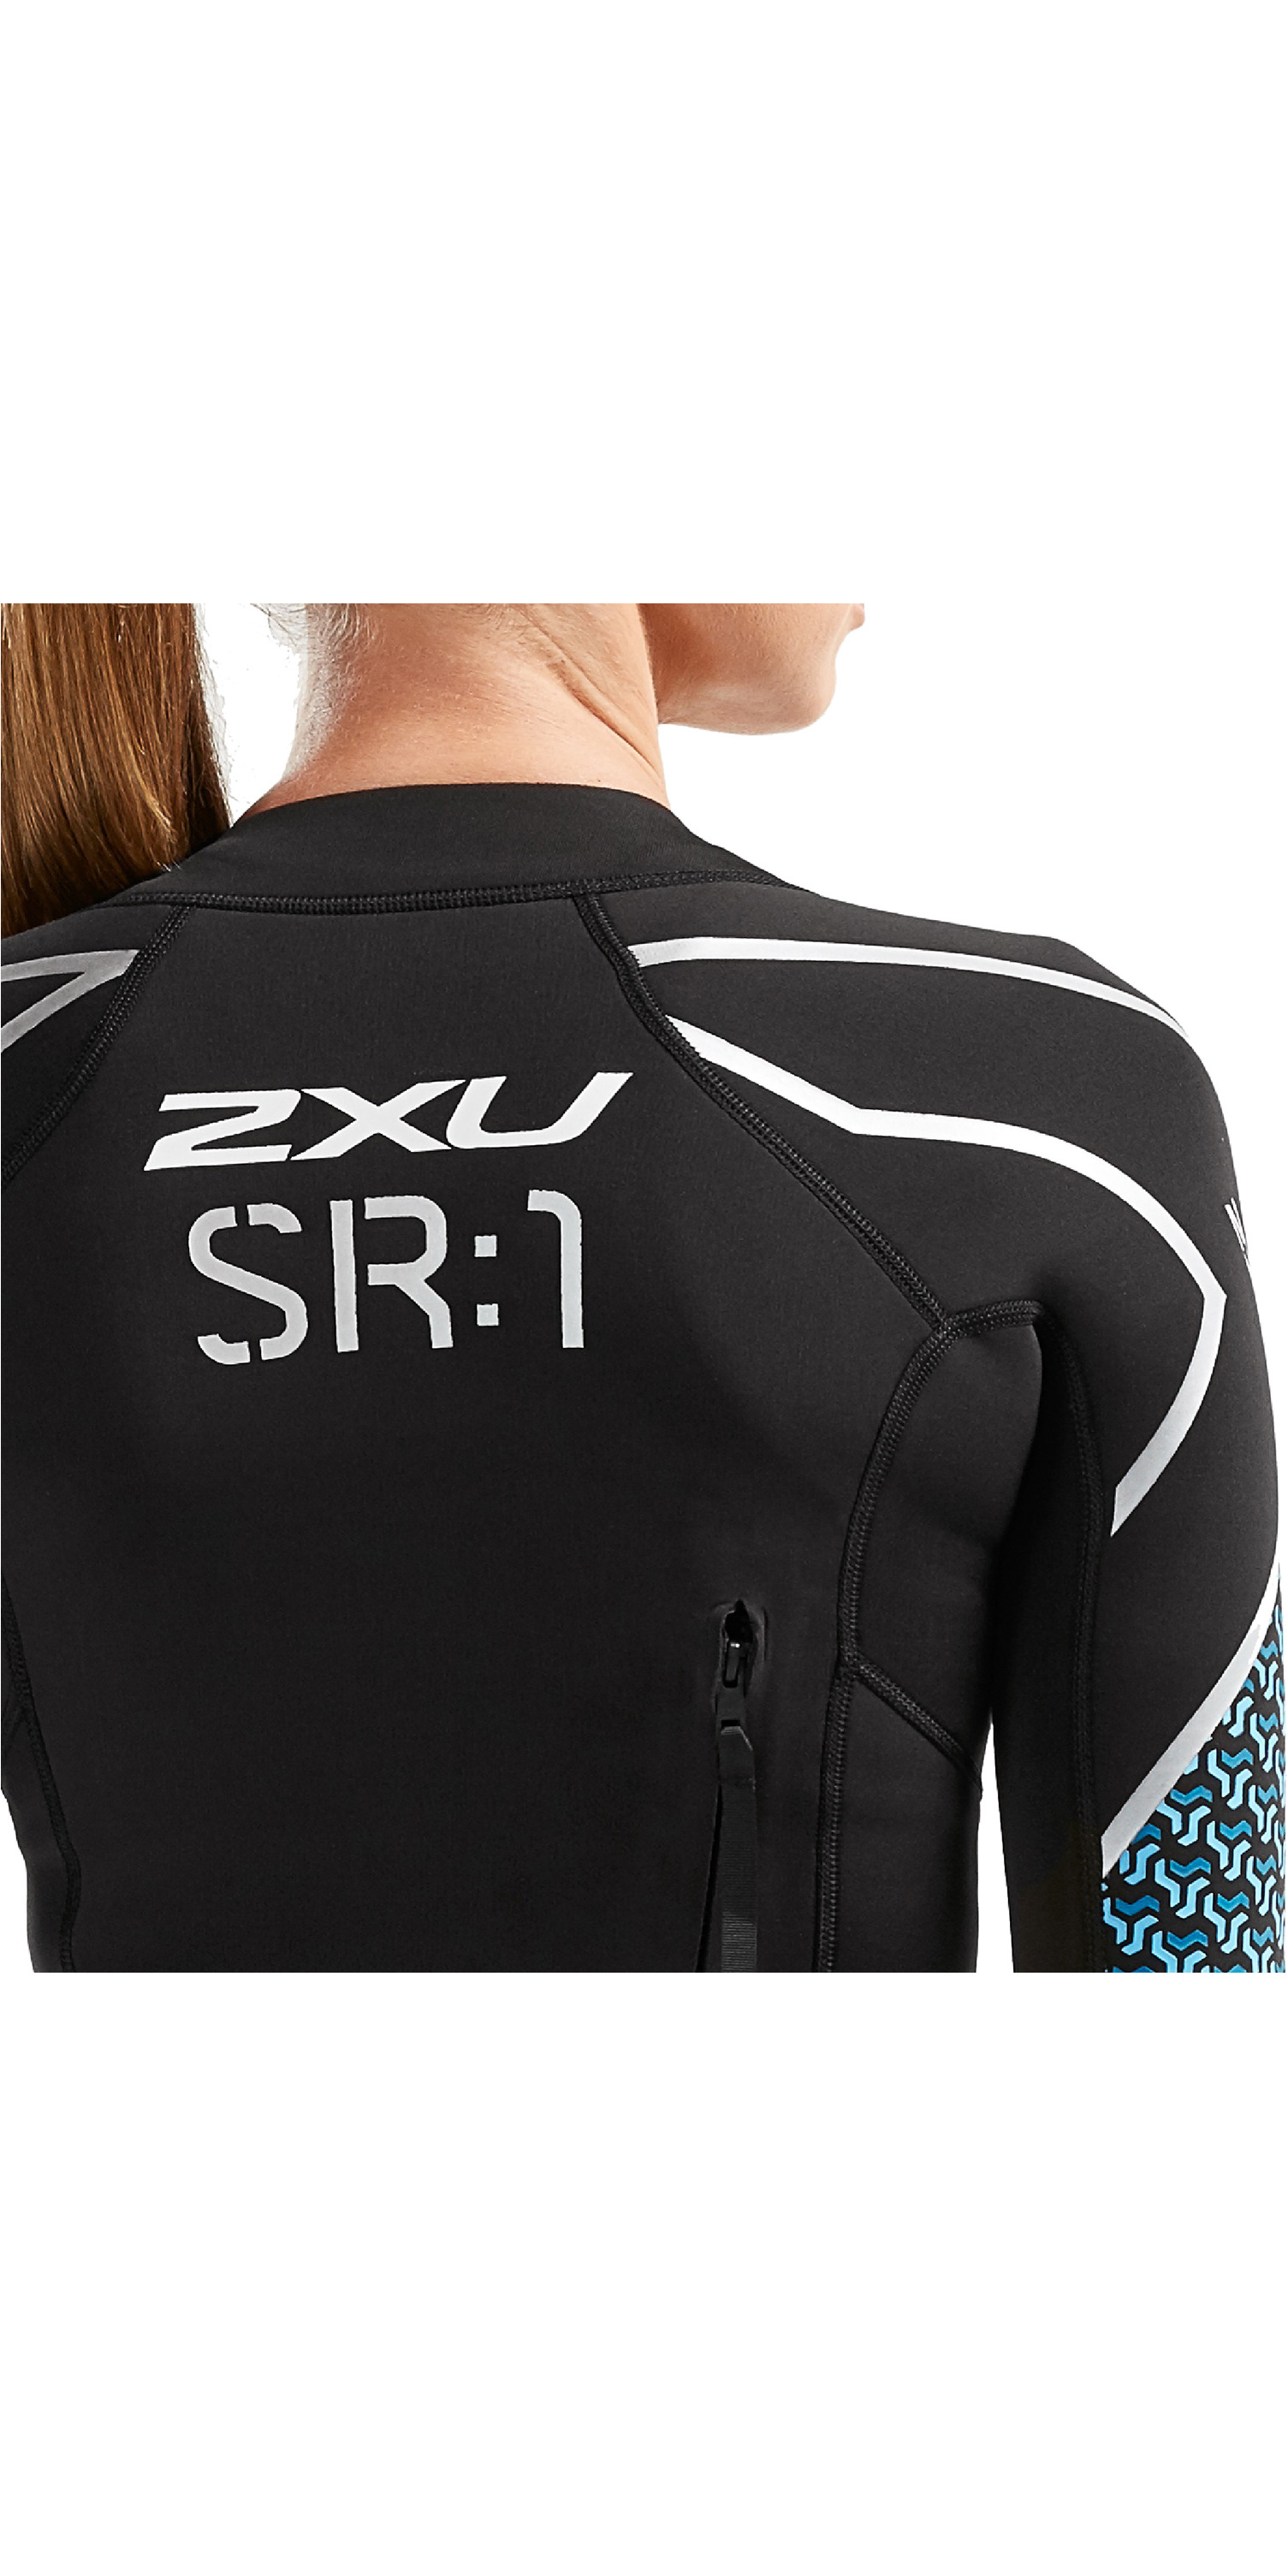 abstraktion Imidlertid seksuel 2021 2XU Womens Pro Swim-Run SR1 Wetsuit Black / Aquarius Teal Print  WW5480c | Watersports Outlet